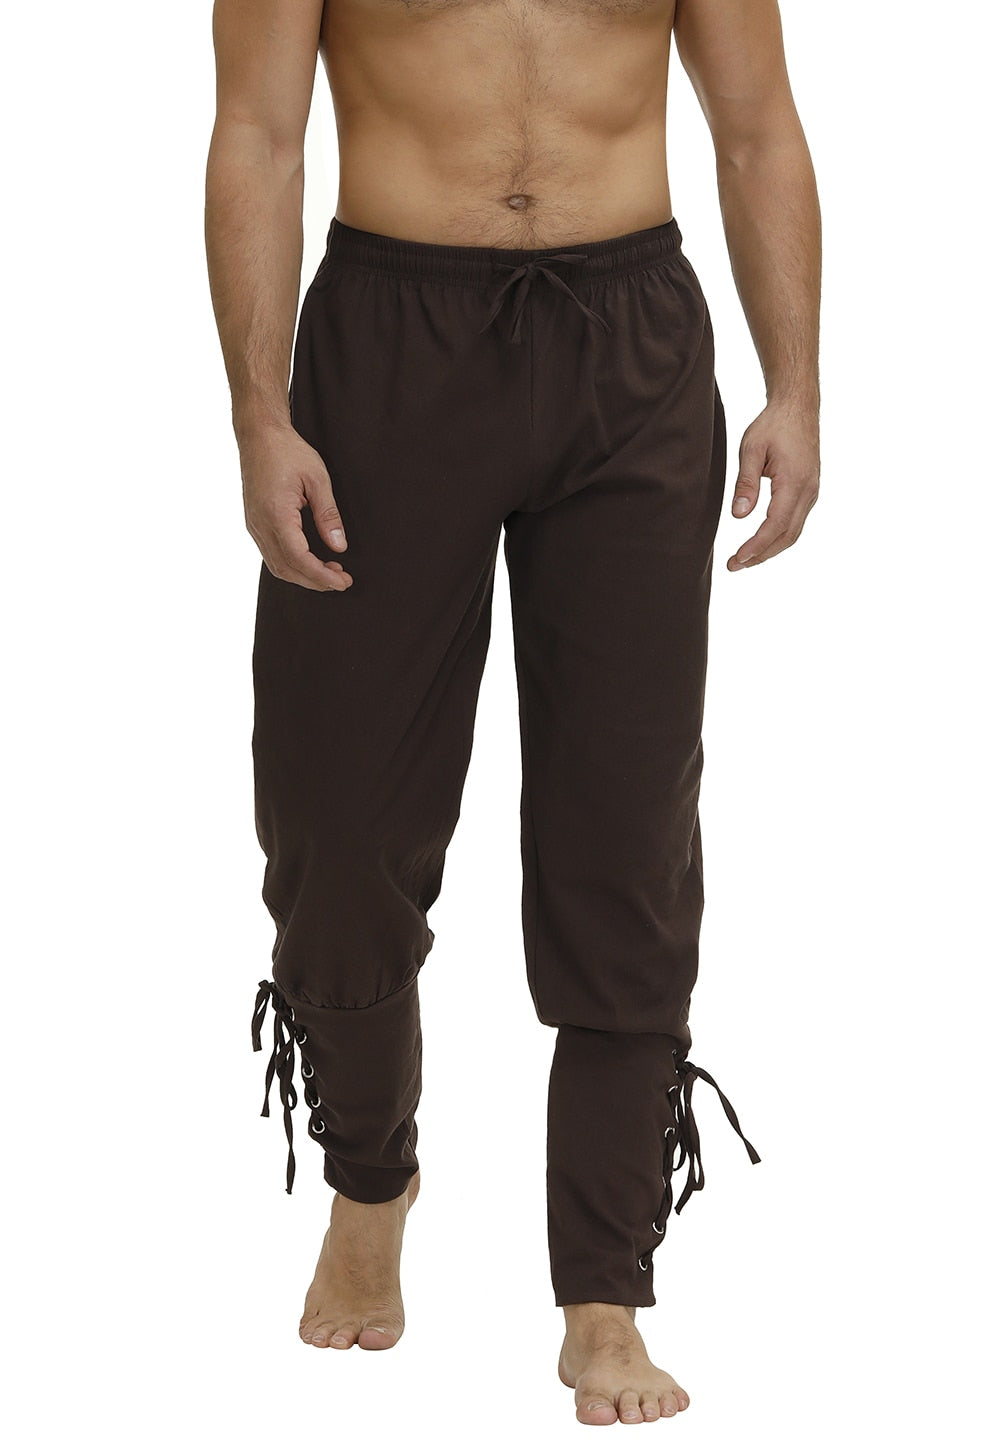 Pirate Pant Viking Costume for Men Renaissance Medieval Pants Drawstring Shorts Halloween Costume Adult Cosplay